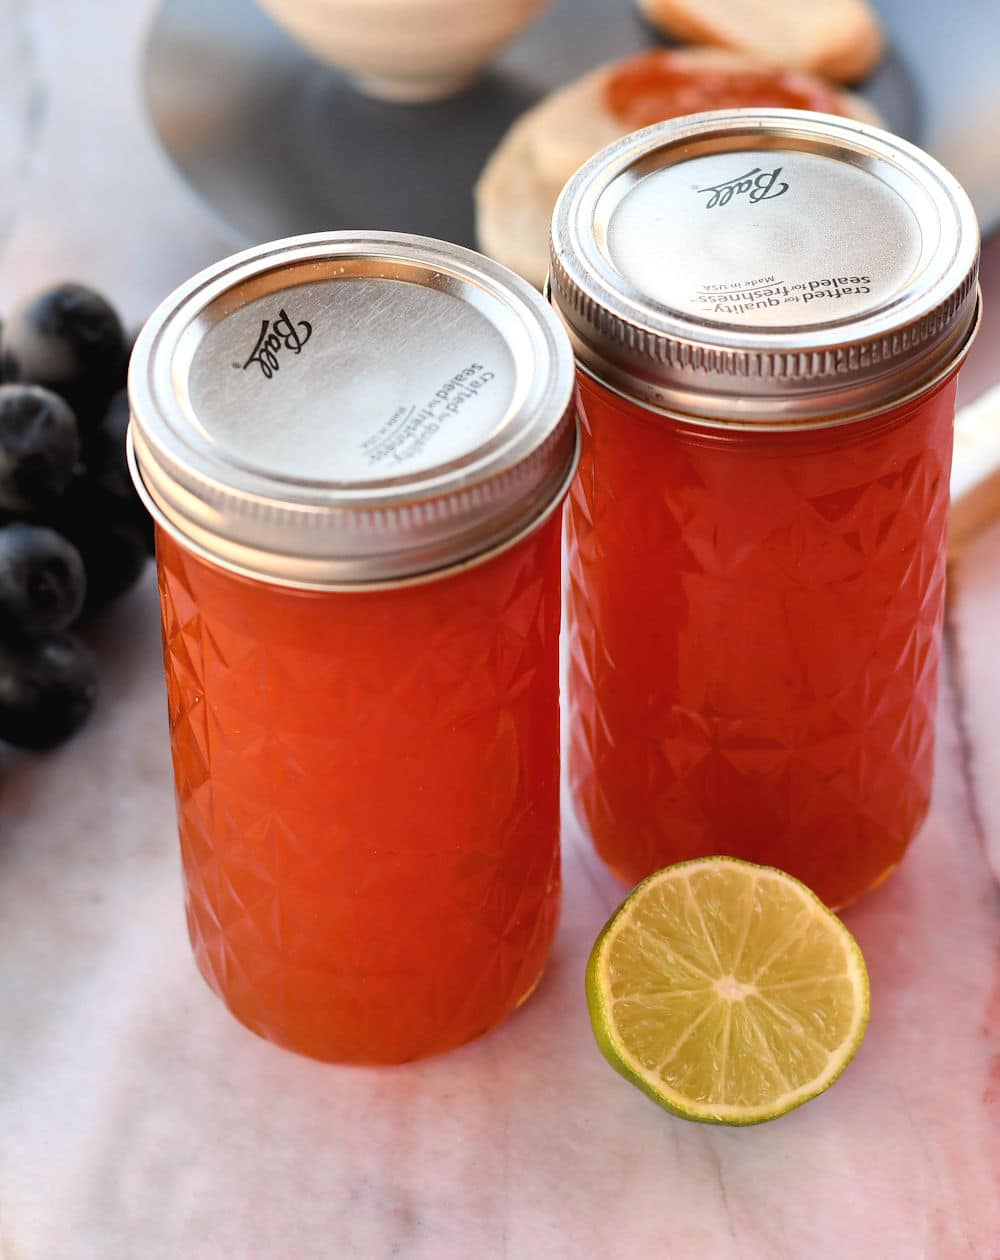 24Bite Recipe: Papaya Jelly Without Commercial Pectin by Christian Guzman